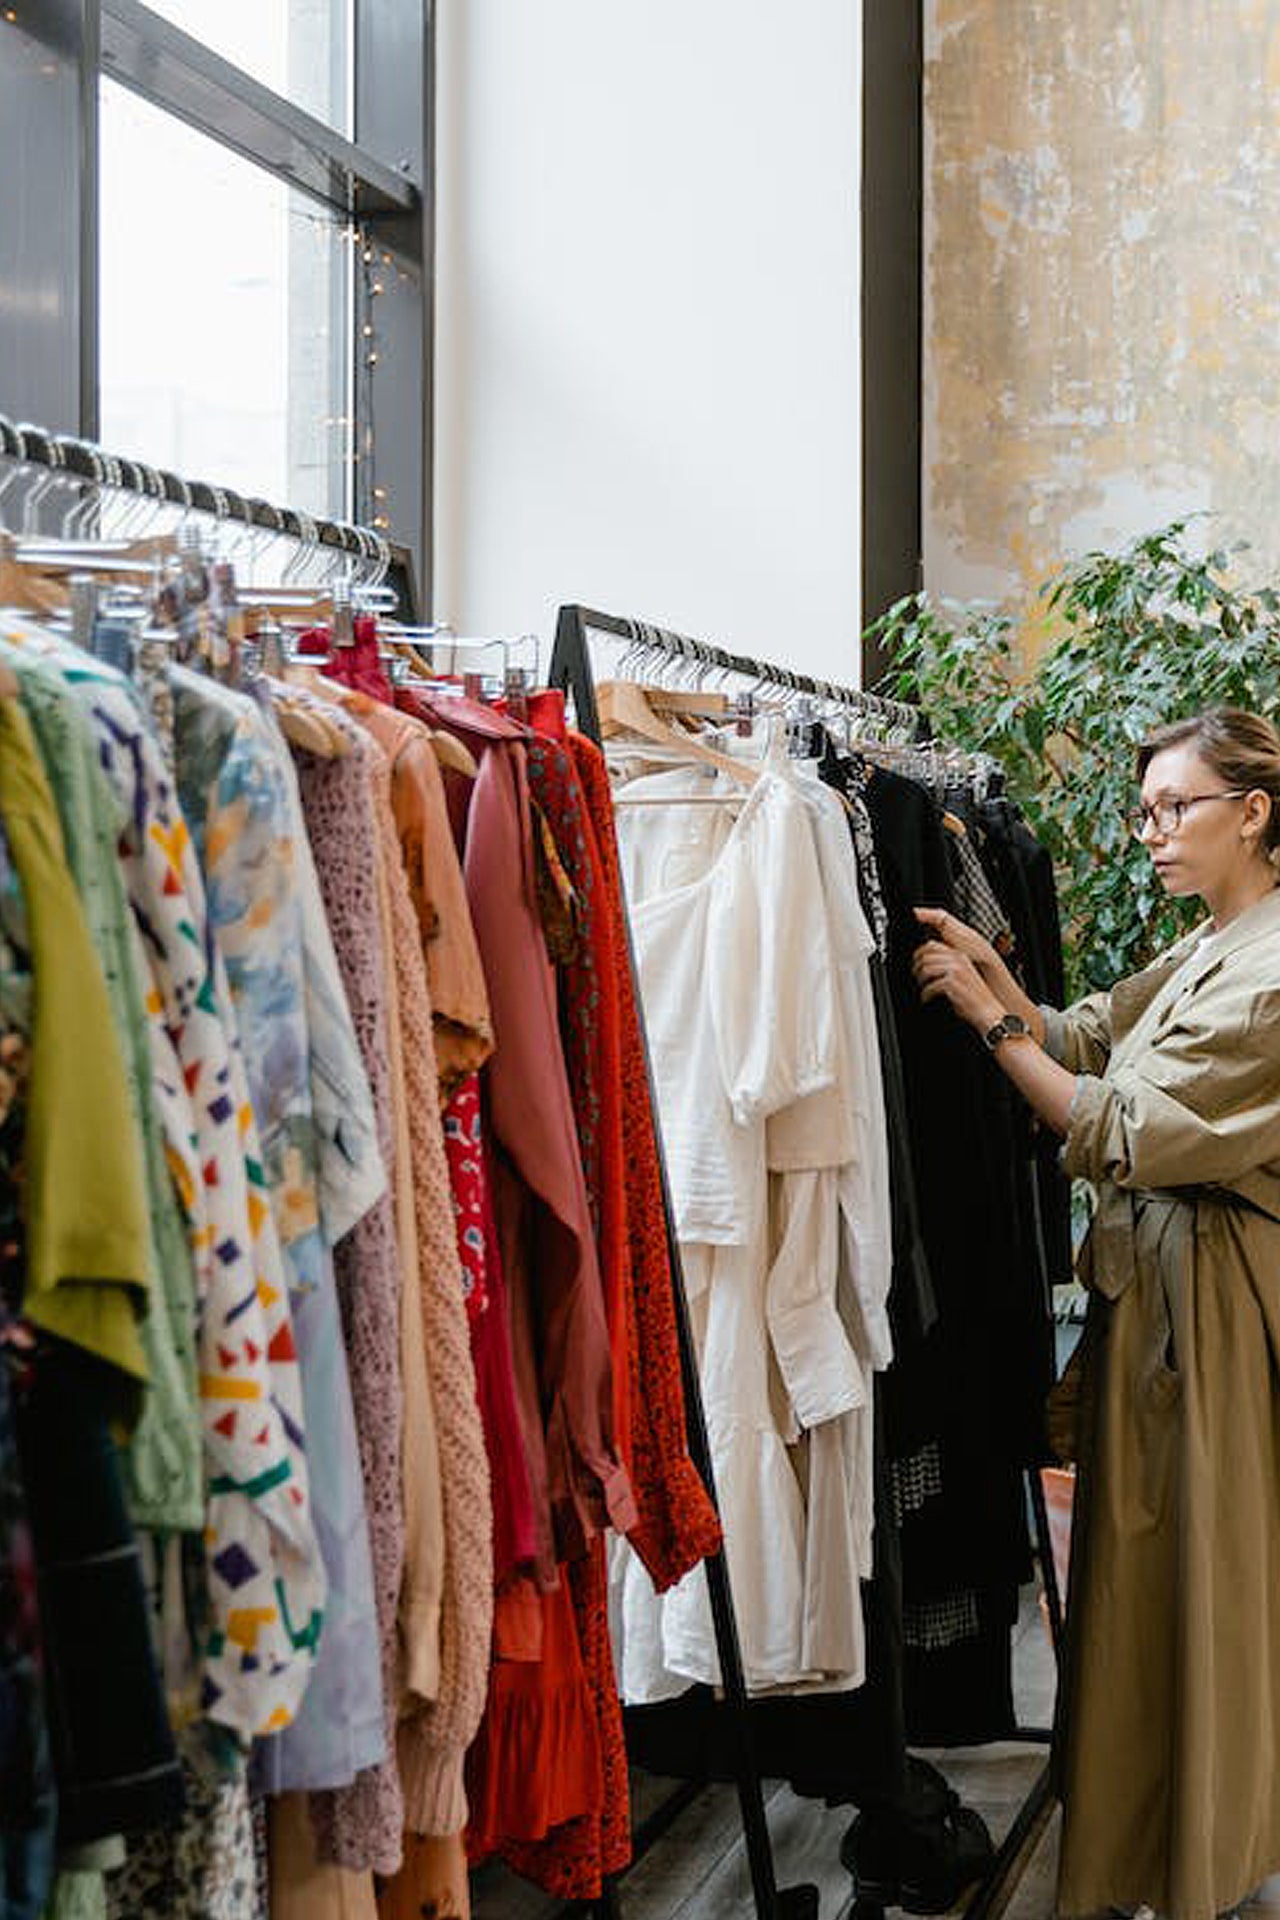 Green Fashion & Sustainability: 22 Ways to Shop Responsibly